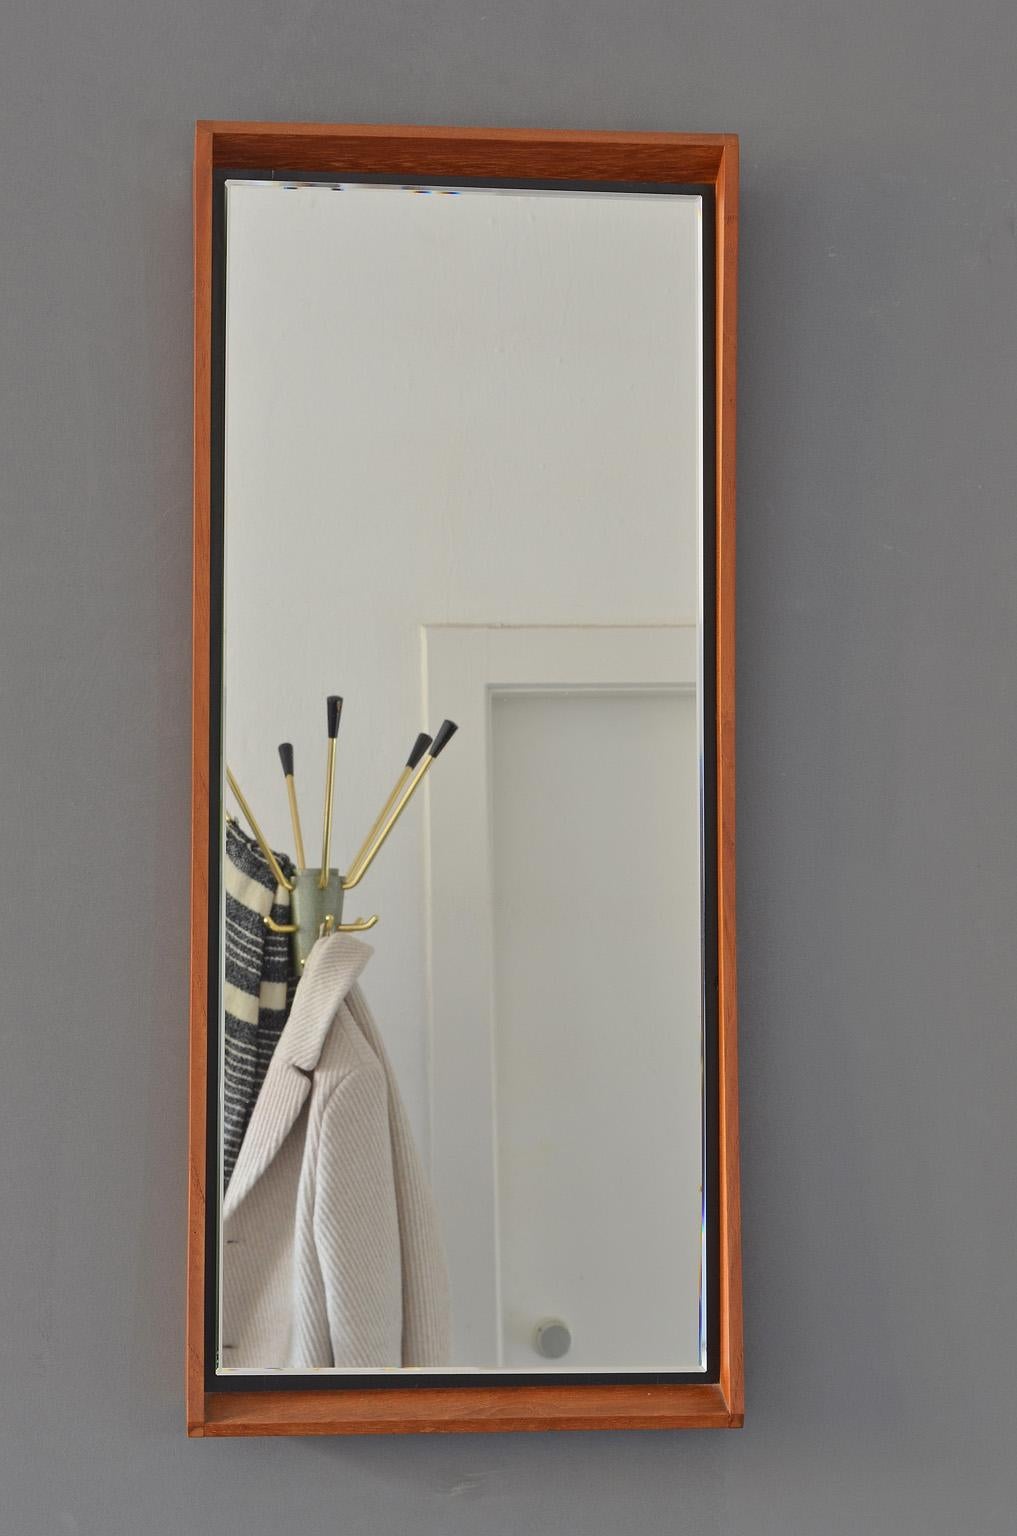 Danish wall mirror with crystal cut edge, brown teak frame, 1960s.
 